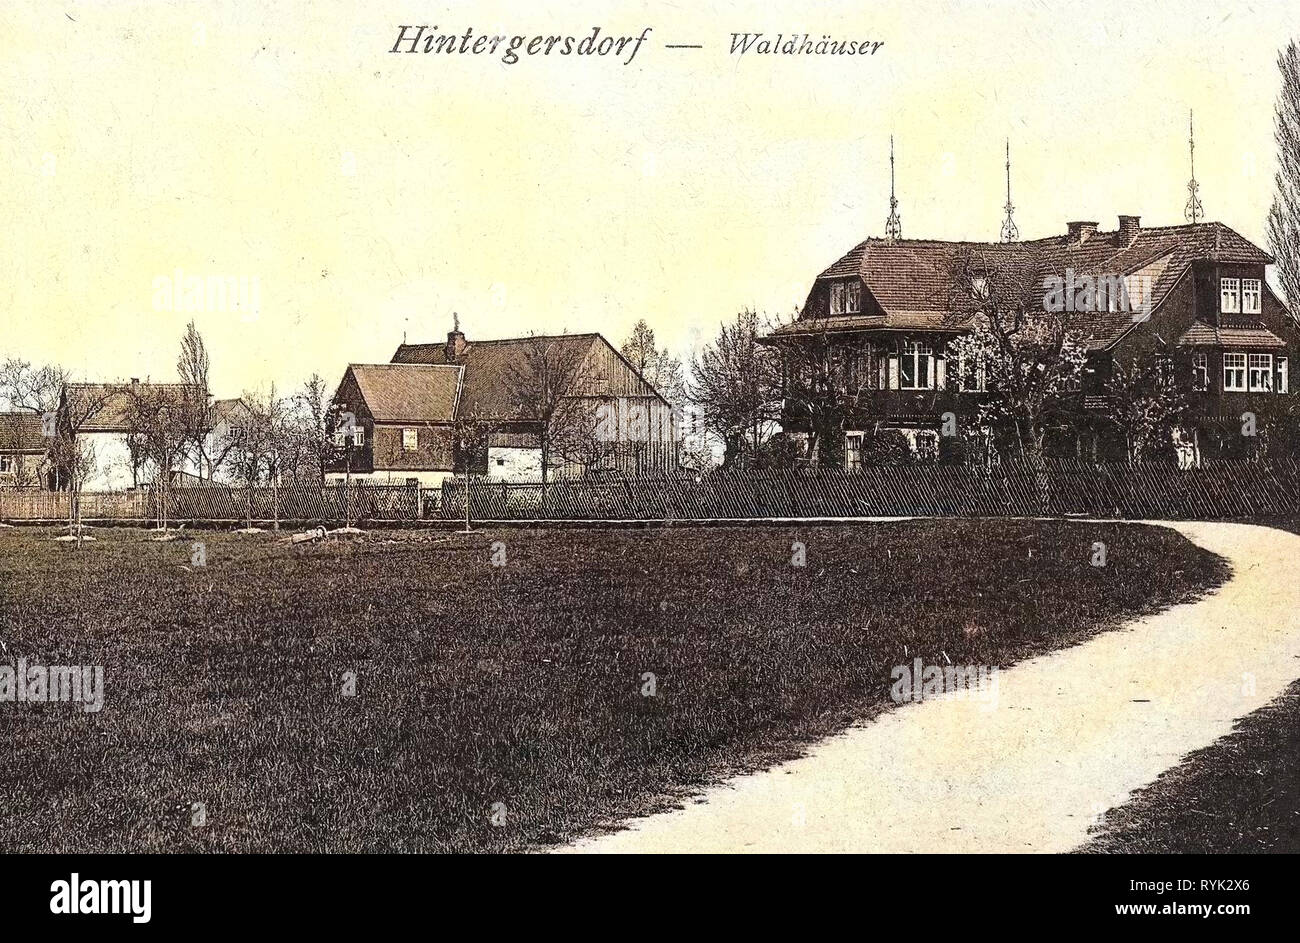 Buildings in Landkreis Sächsische Schweiz-Osterzgebirge, Hintergersdorf, 1914, Landkreis Sächsische Schweiz-Osterzgebirge, Waldhäuser, Germany Stock Photo